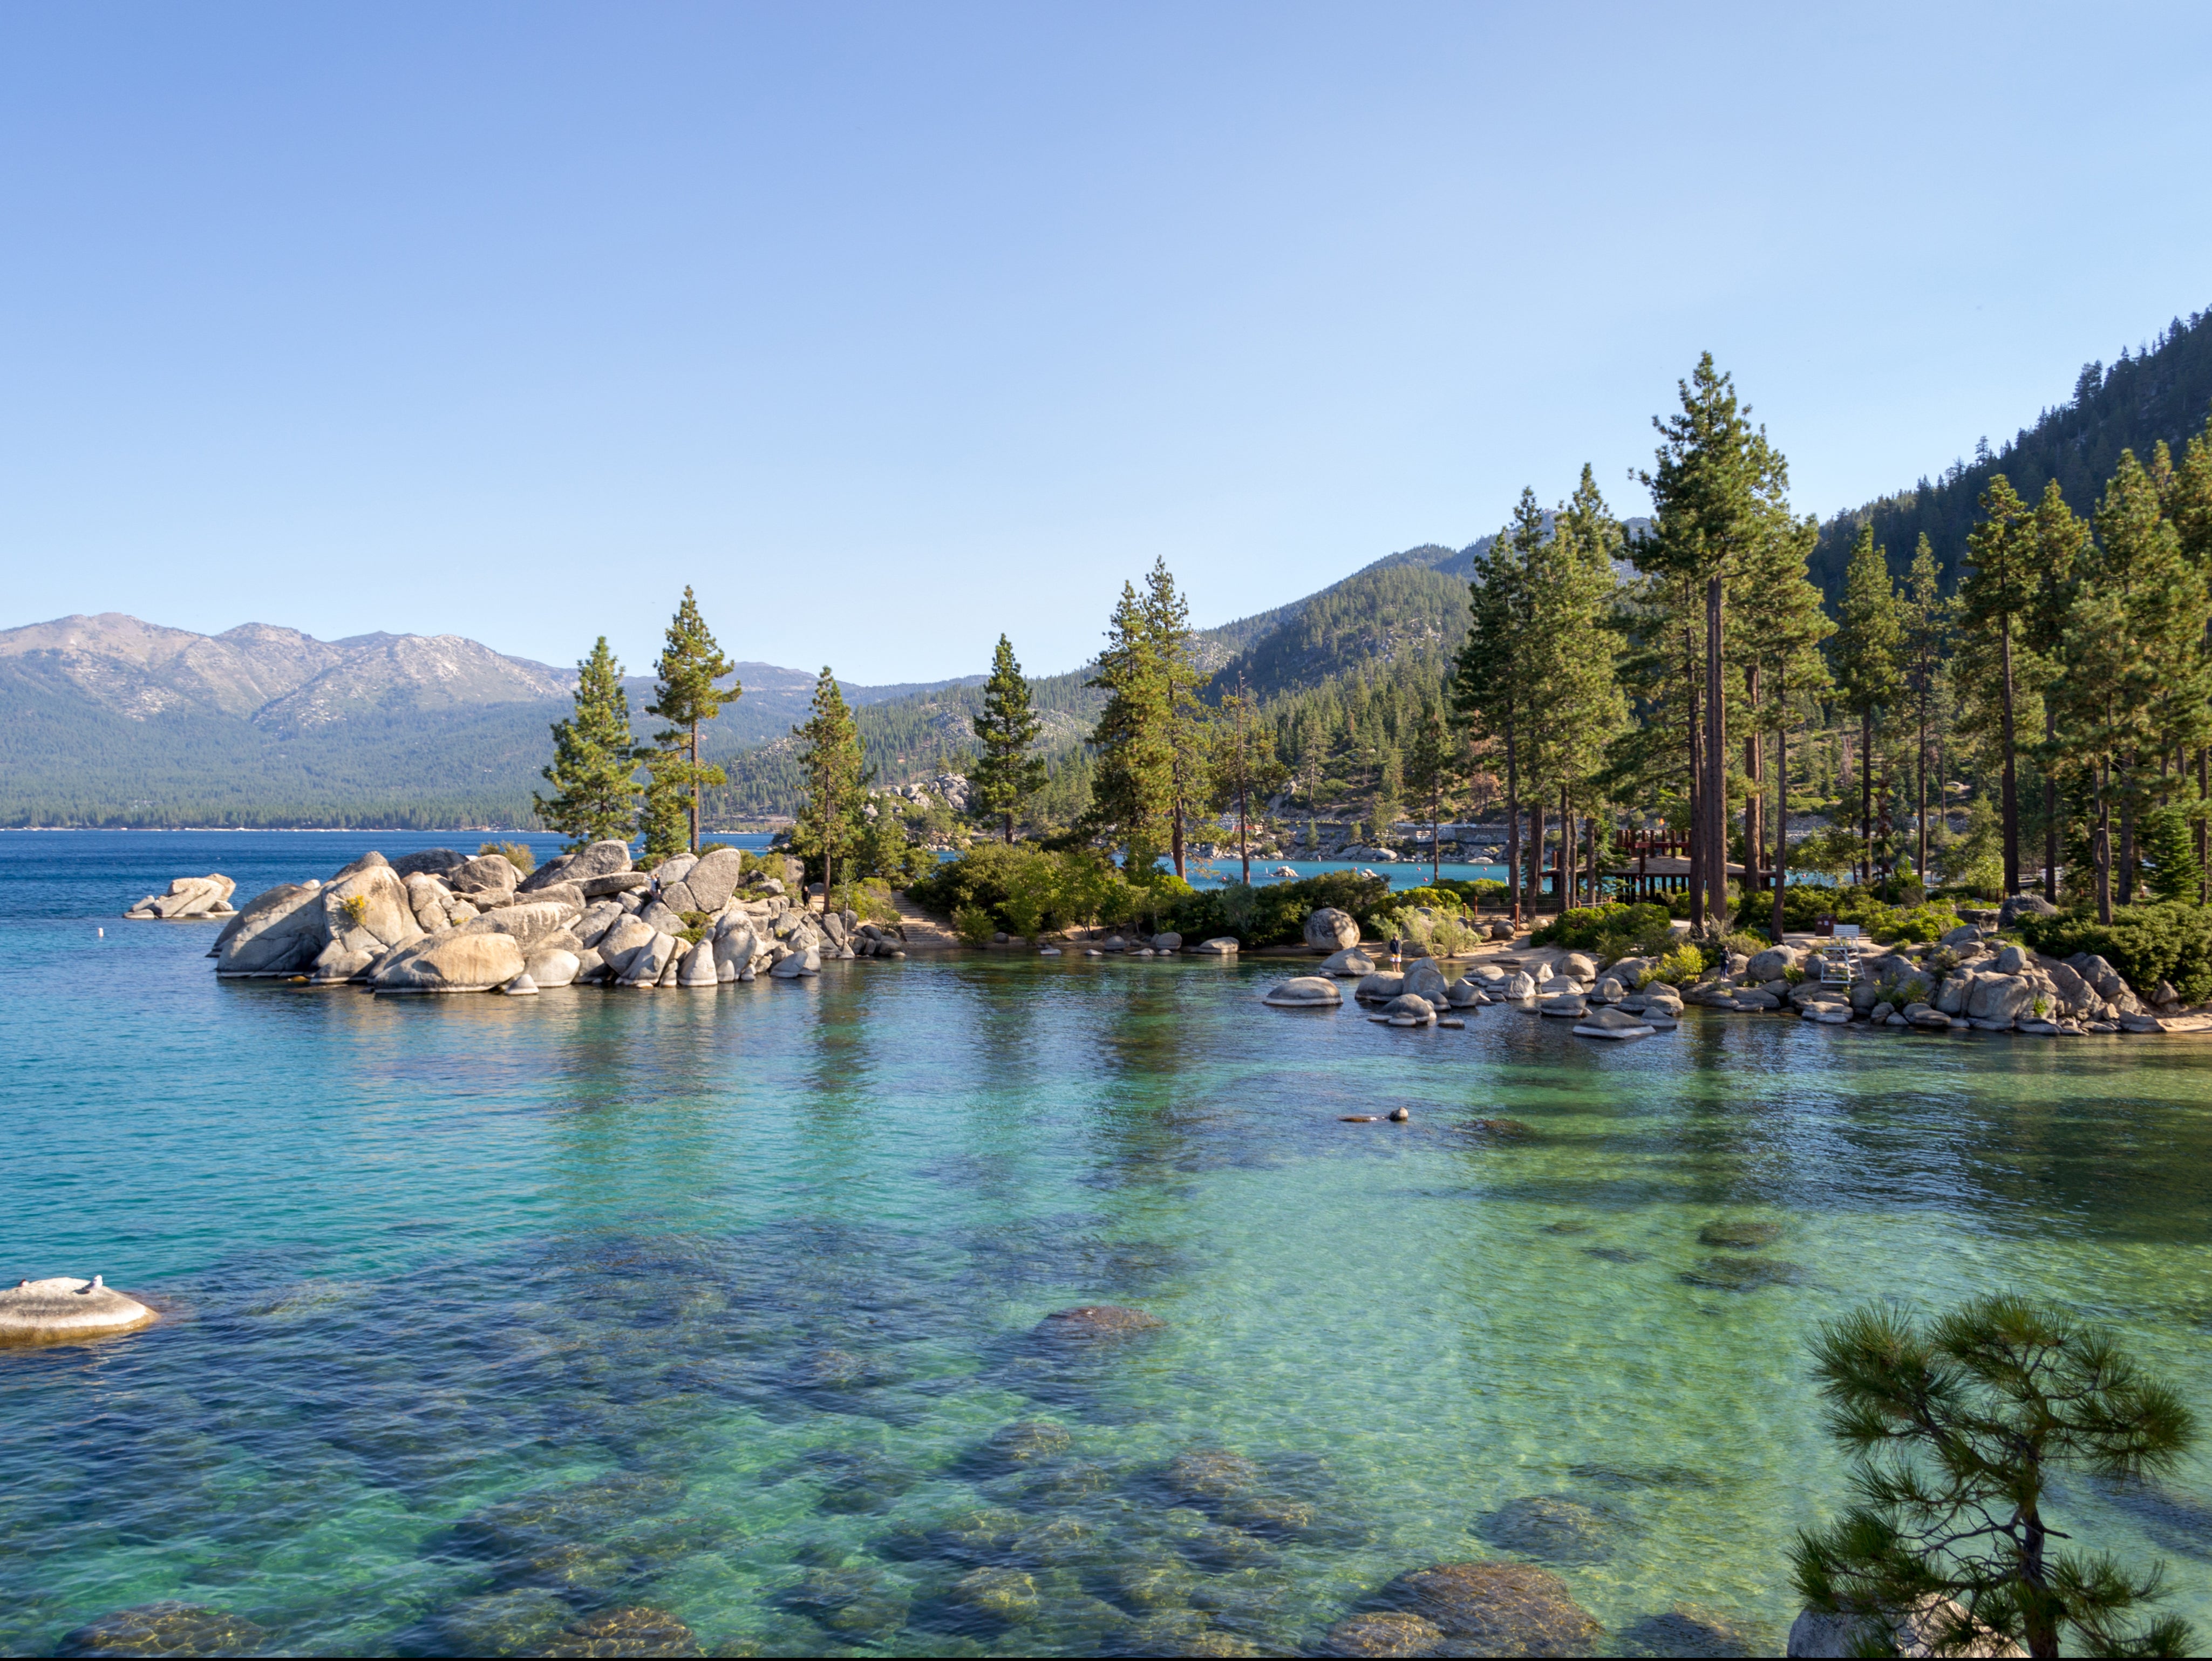 Lake Tahoe is a freshwater alpine lake located in the Sierra Nevada